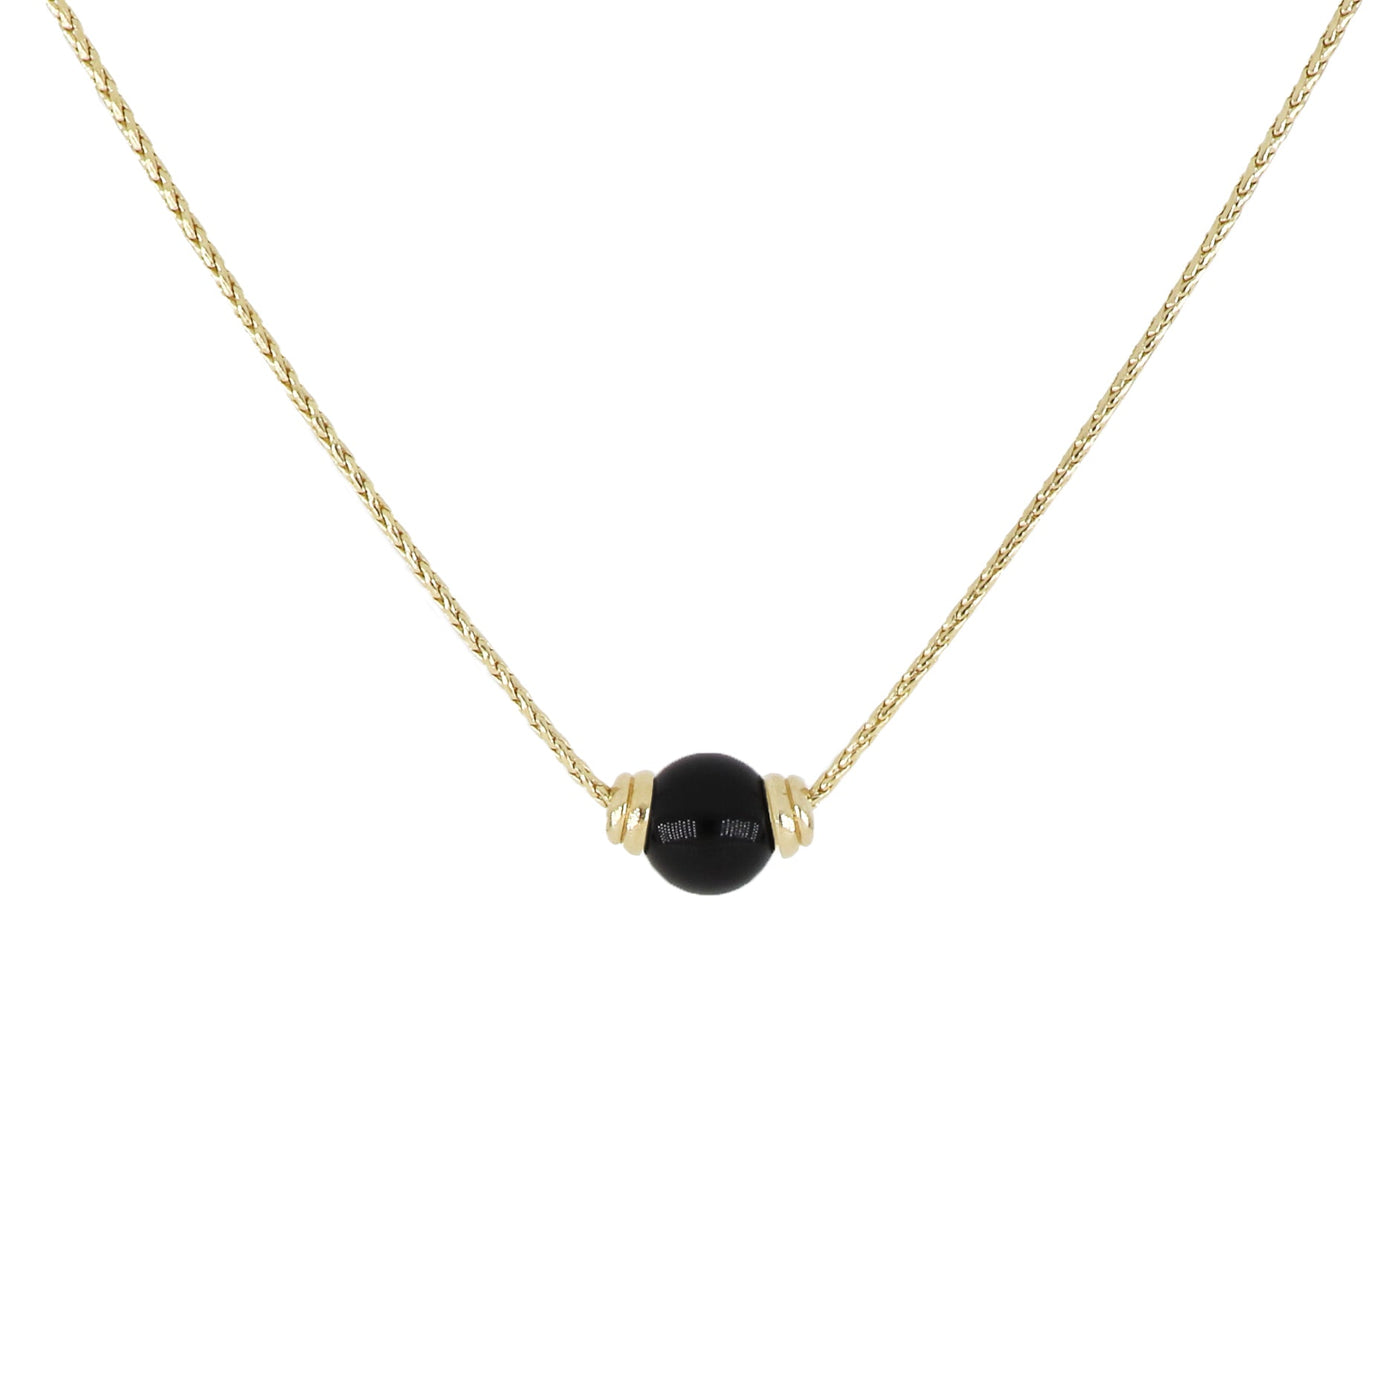 Classic Black onyx gemstone necklace earrings set at ₹2800 | Azilaa